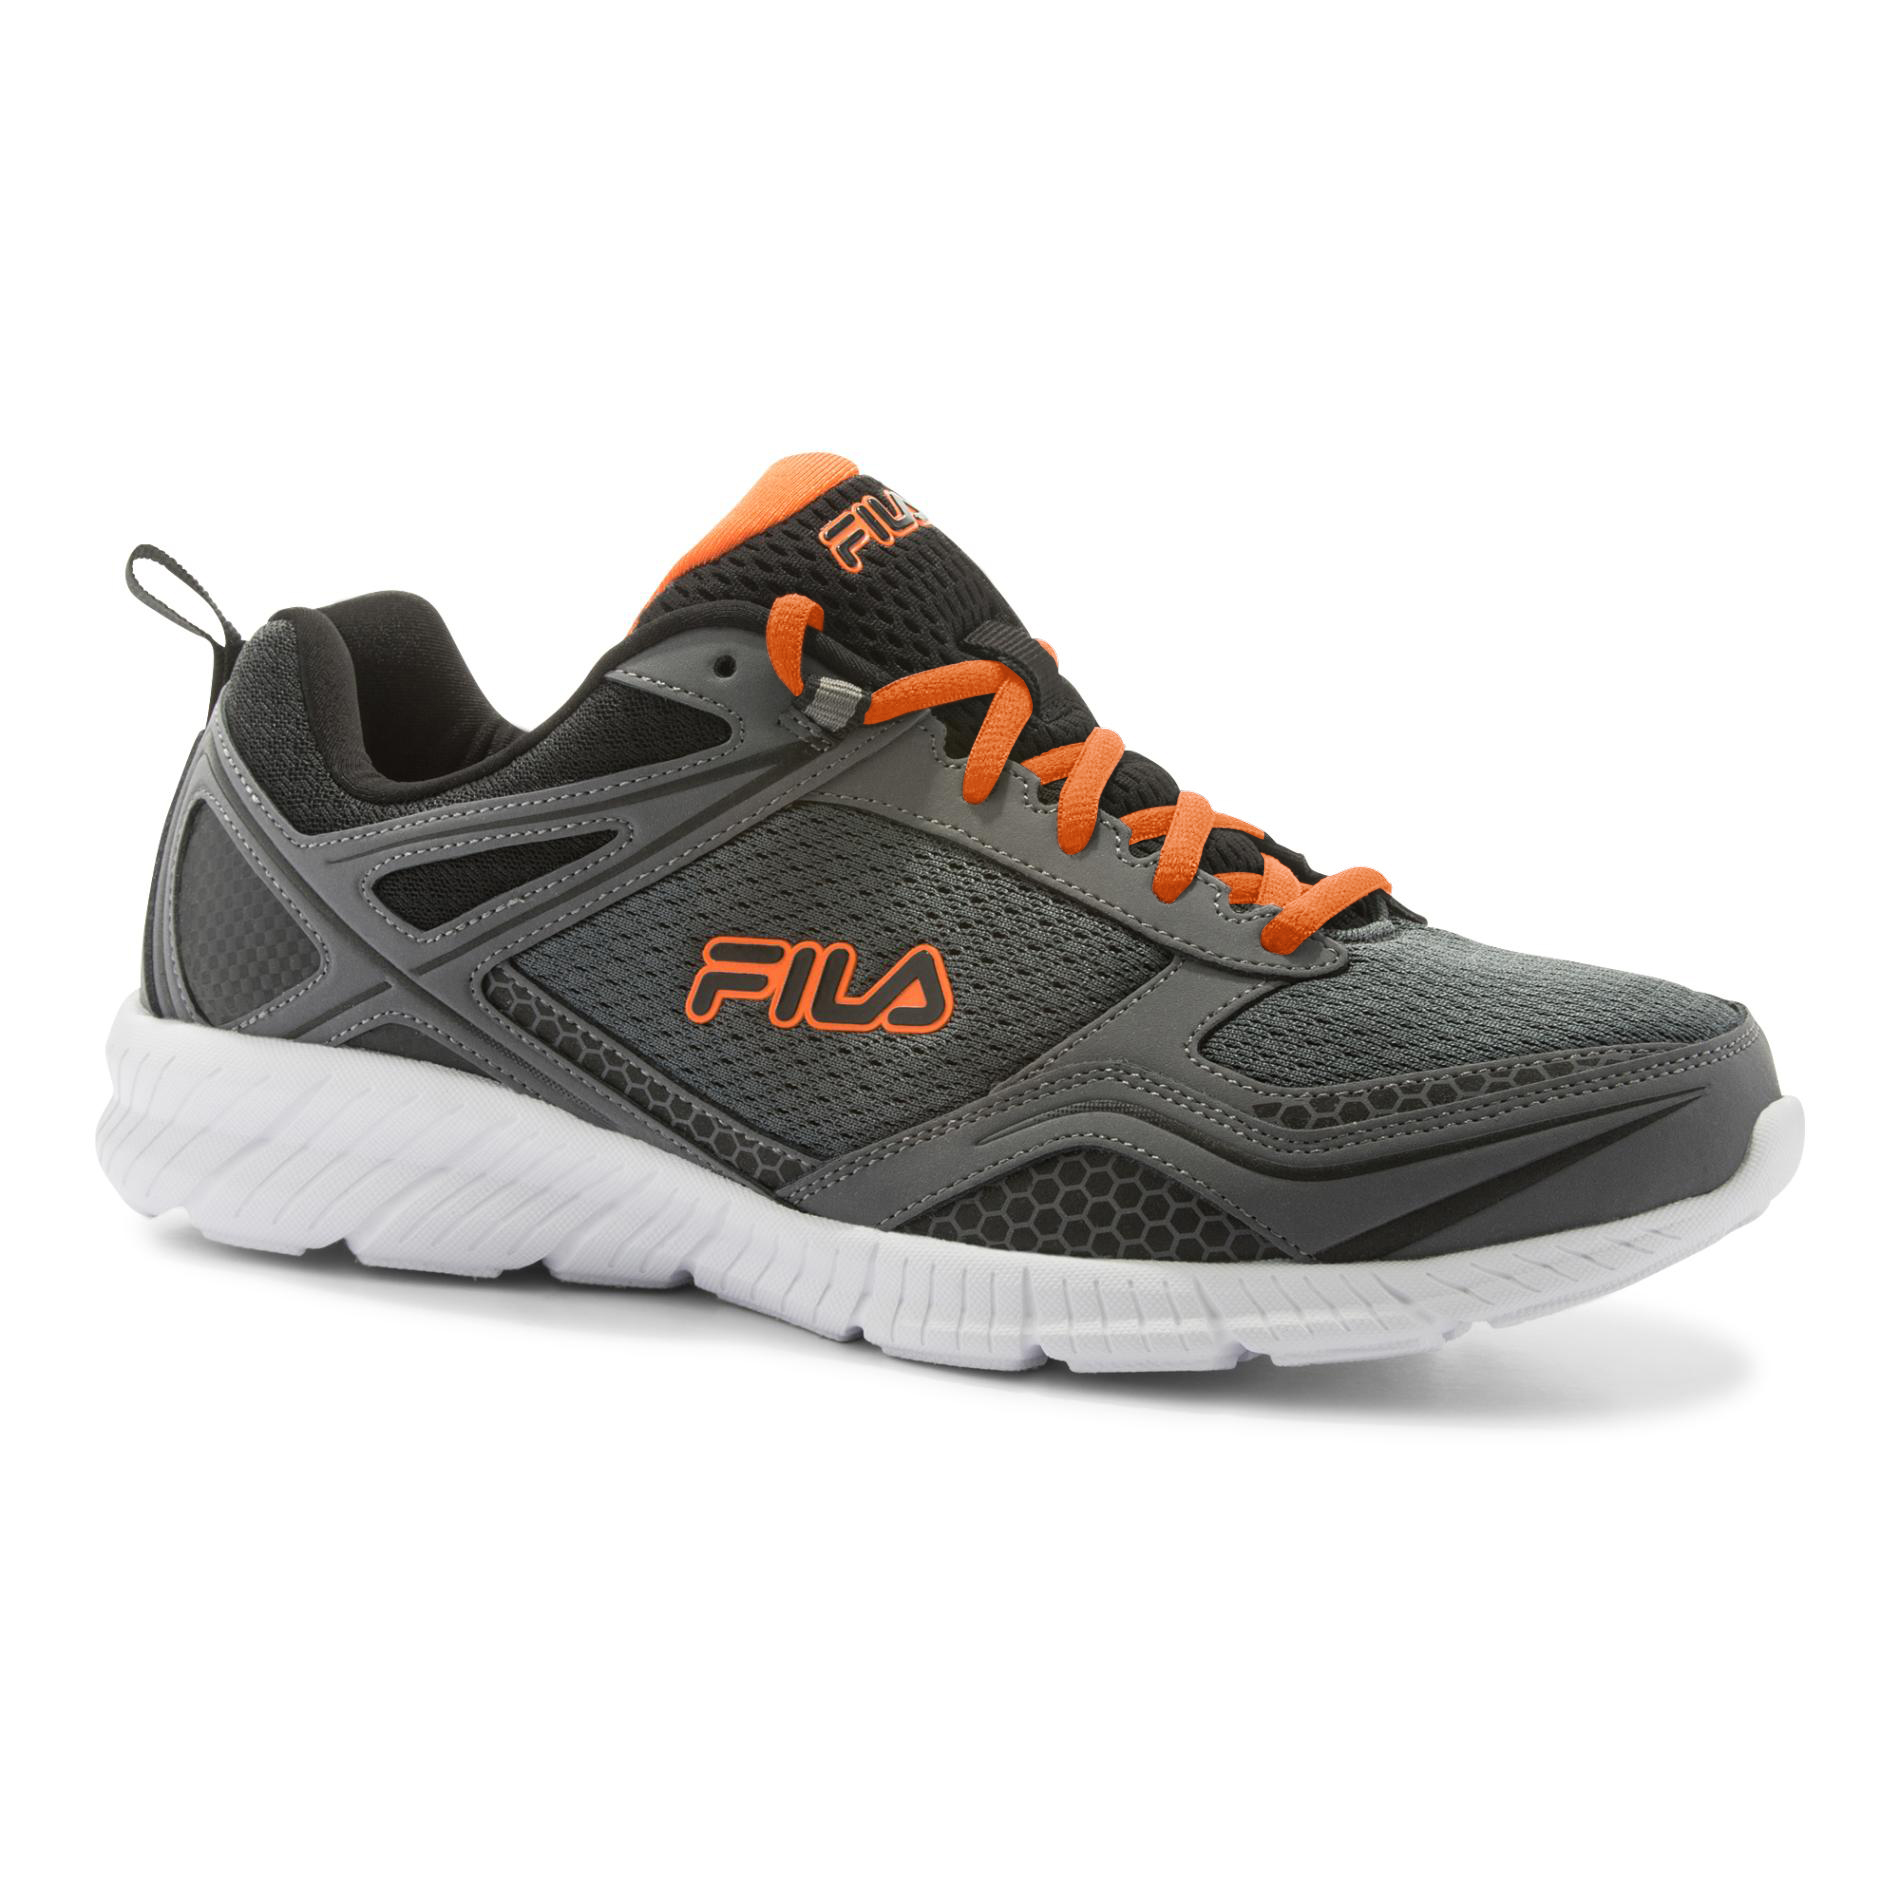 Fila Men's Speedway Athletic Shoe - Gray/Orange